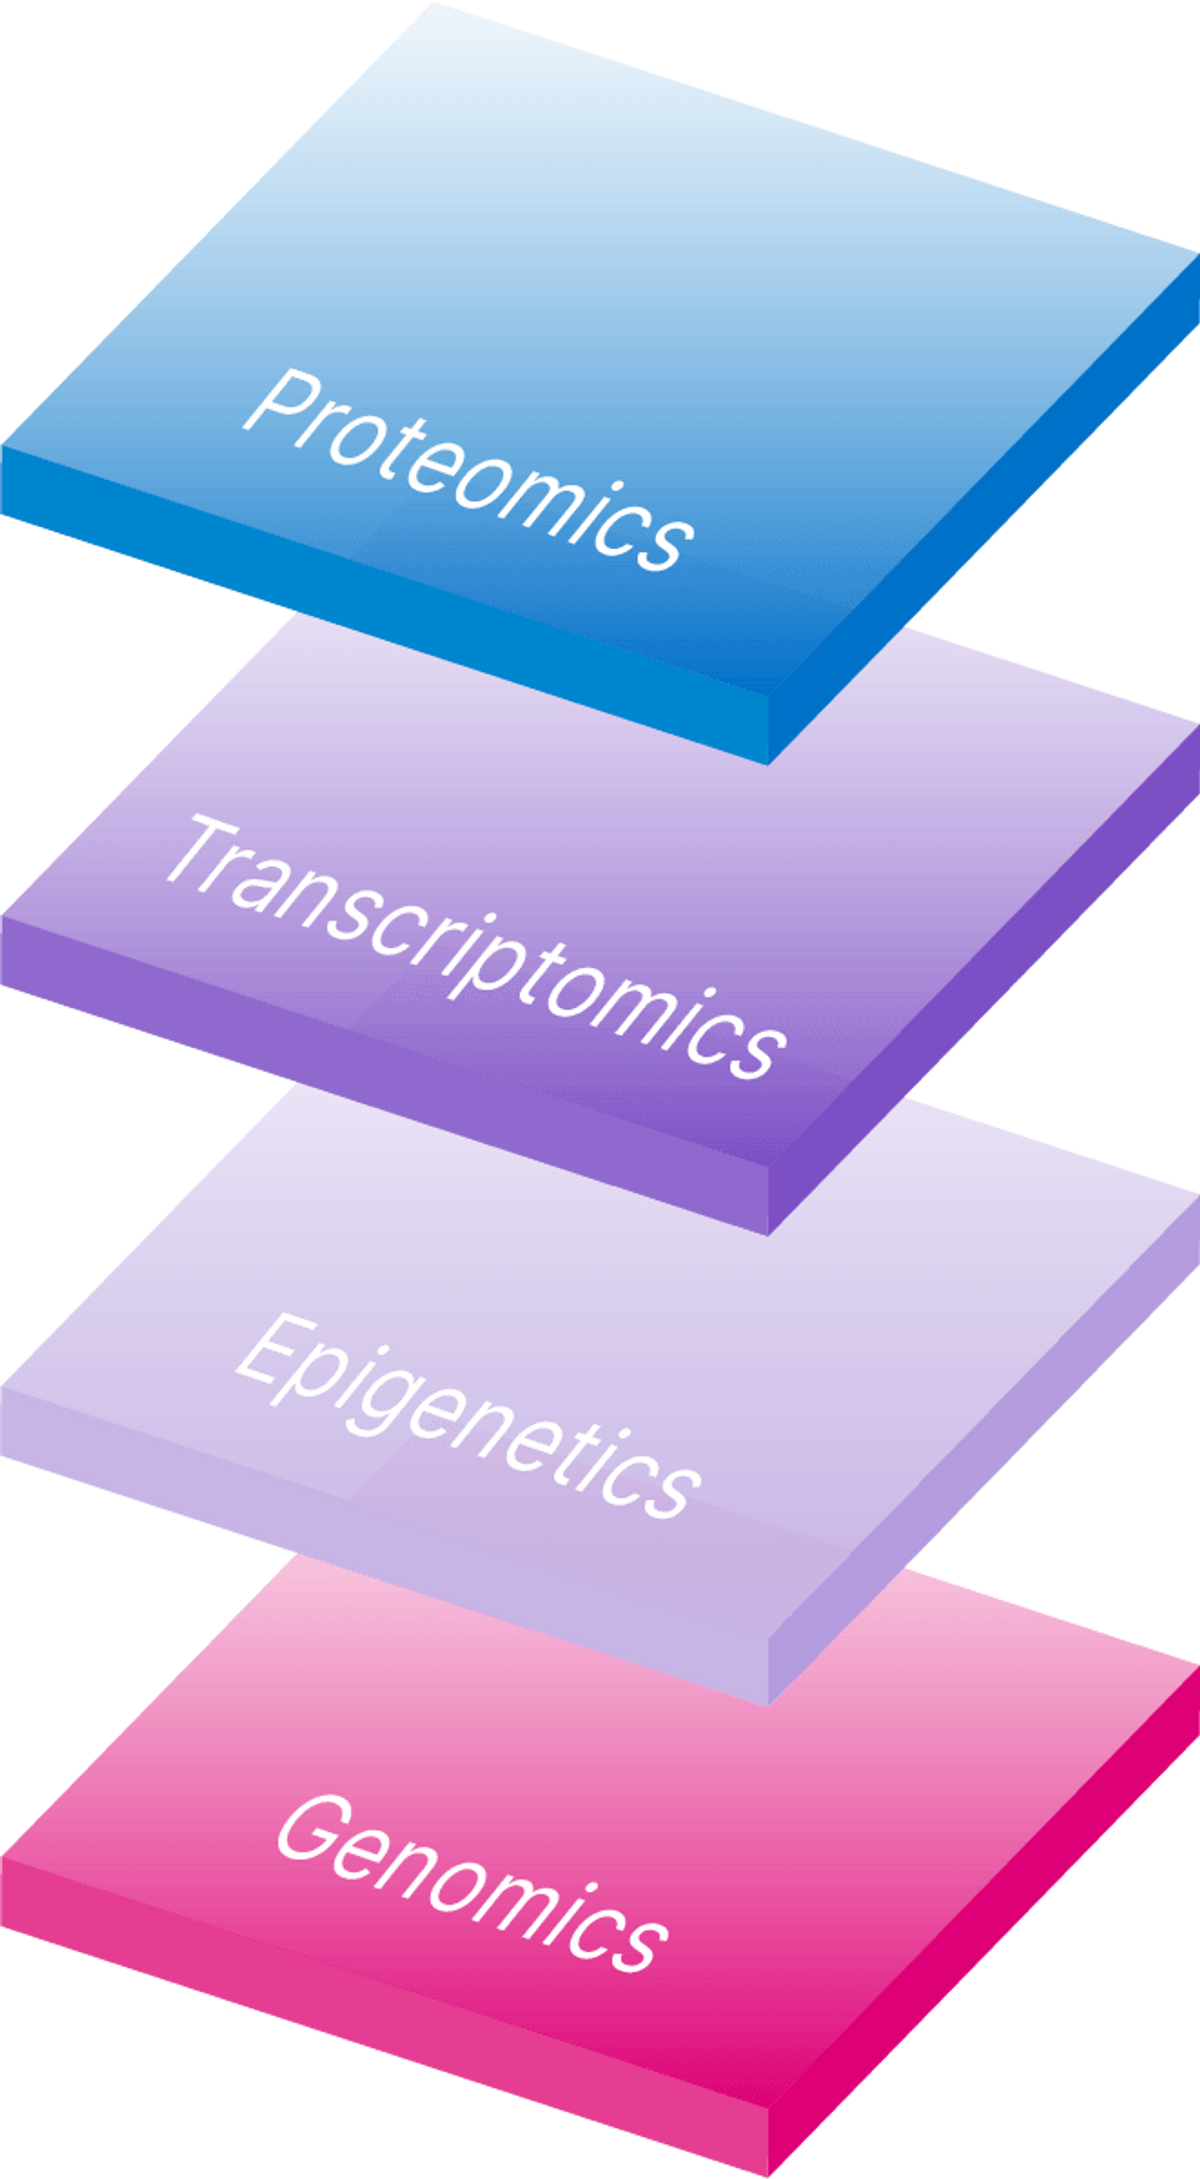 Visual representation of multiomics